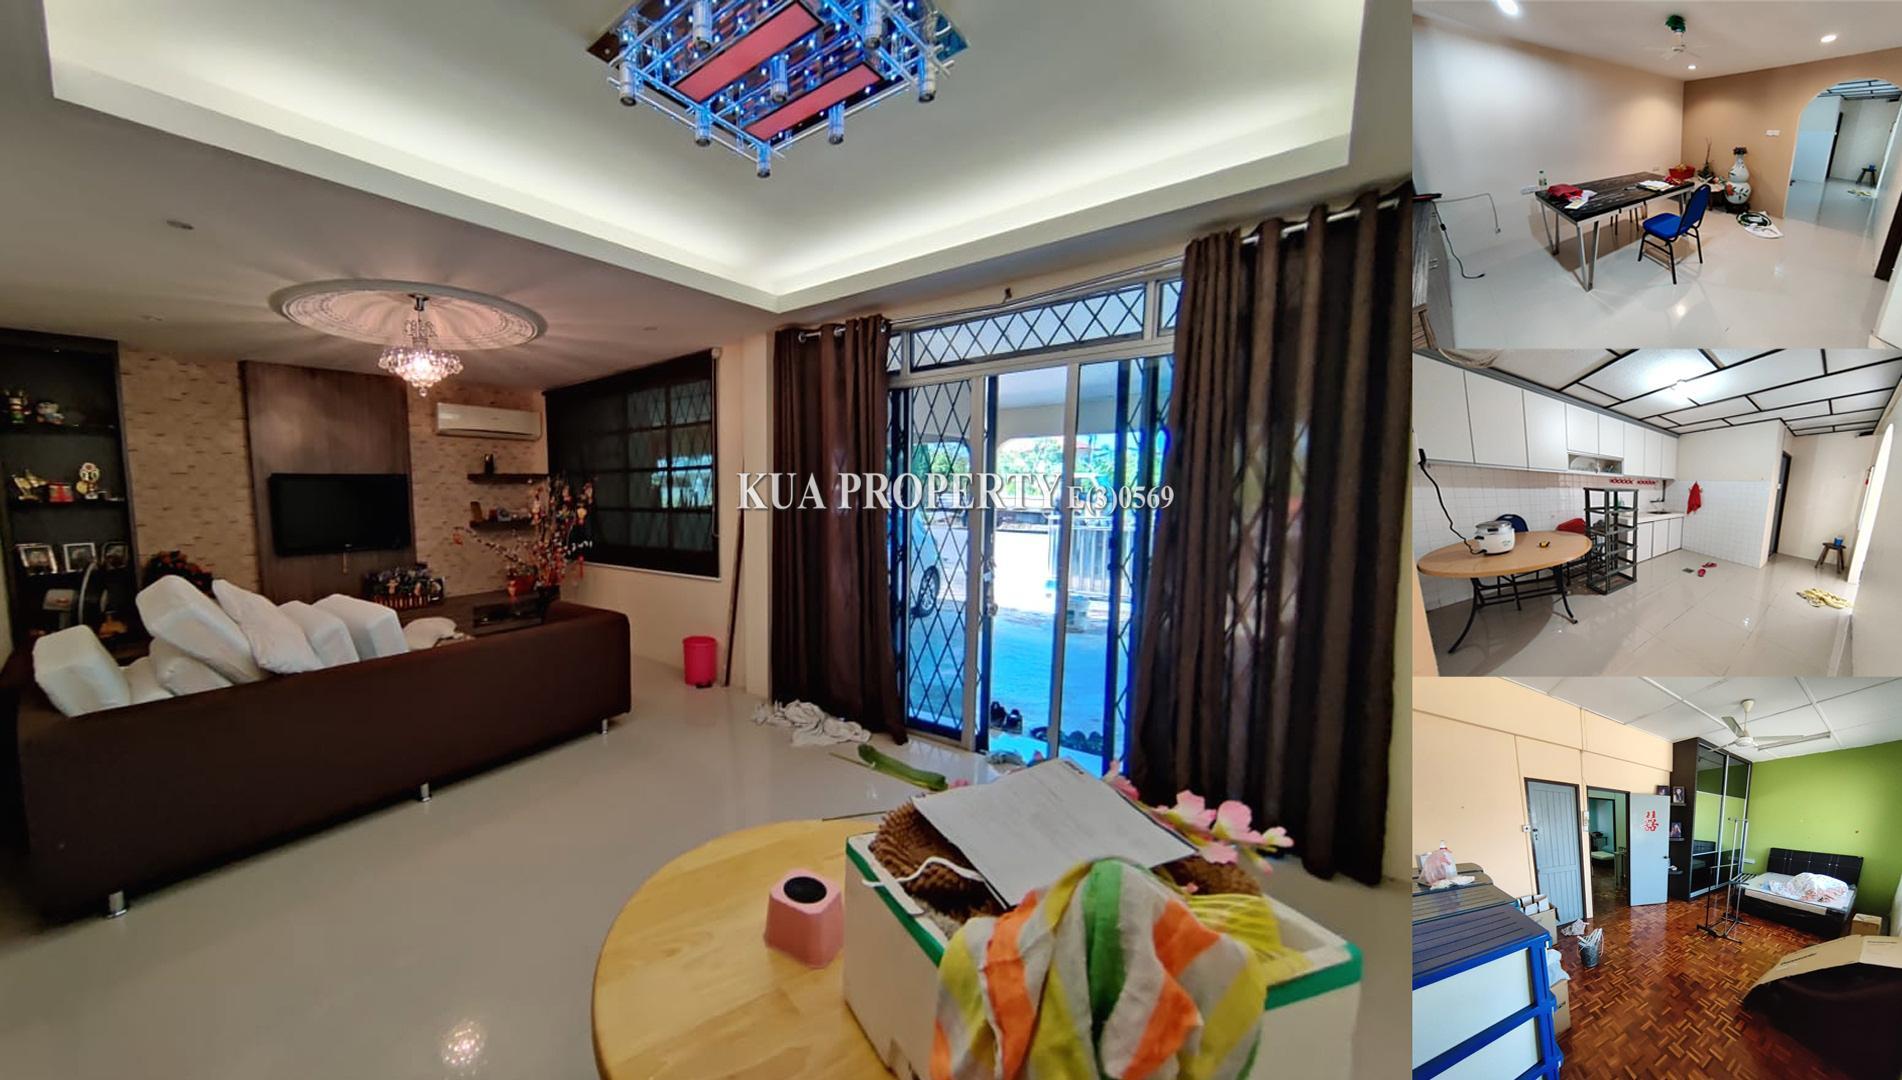 Double Storey Terrace intermediate House For Rent! at Arang Road, Kuching